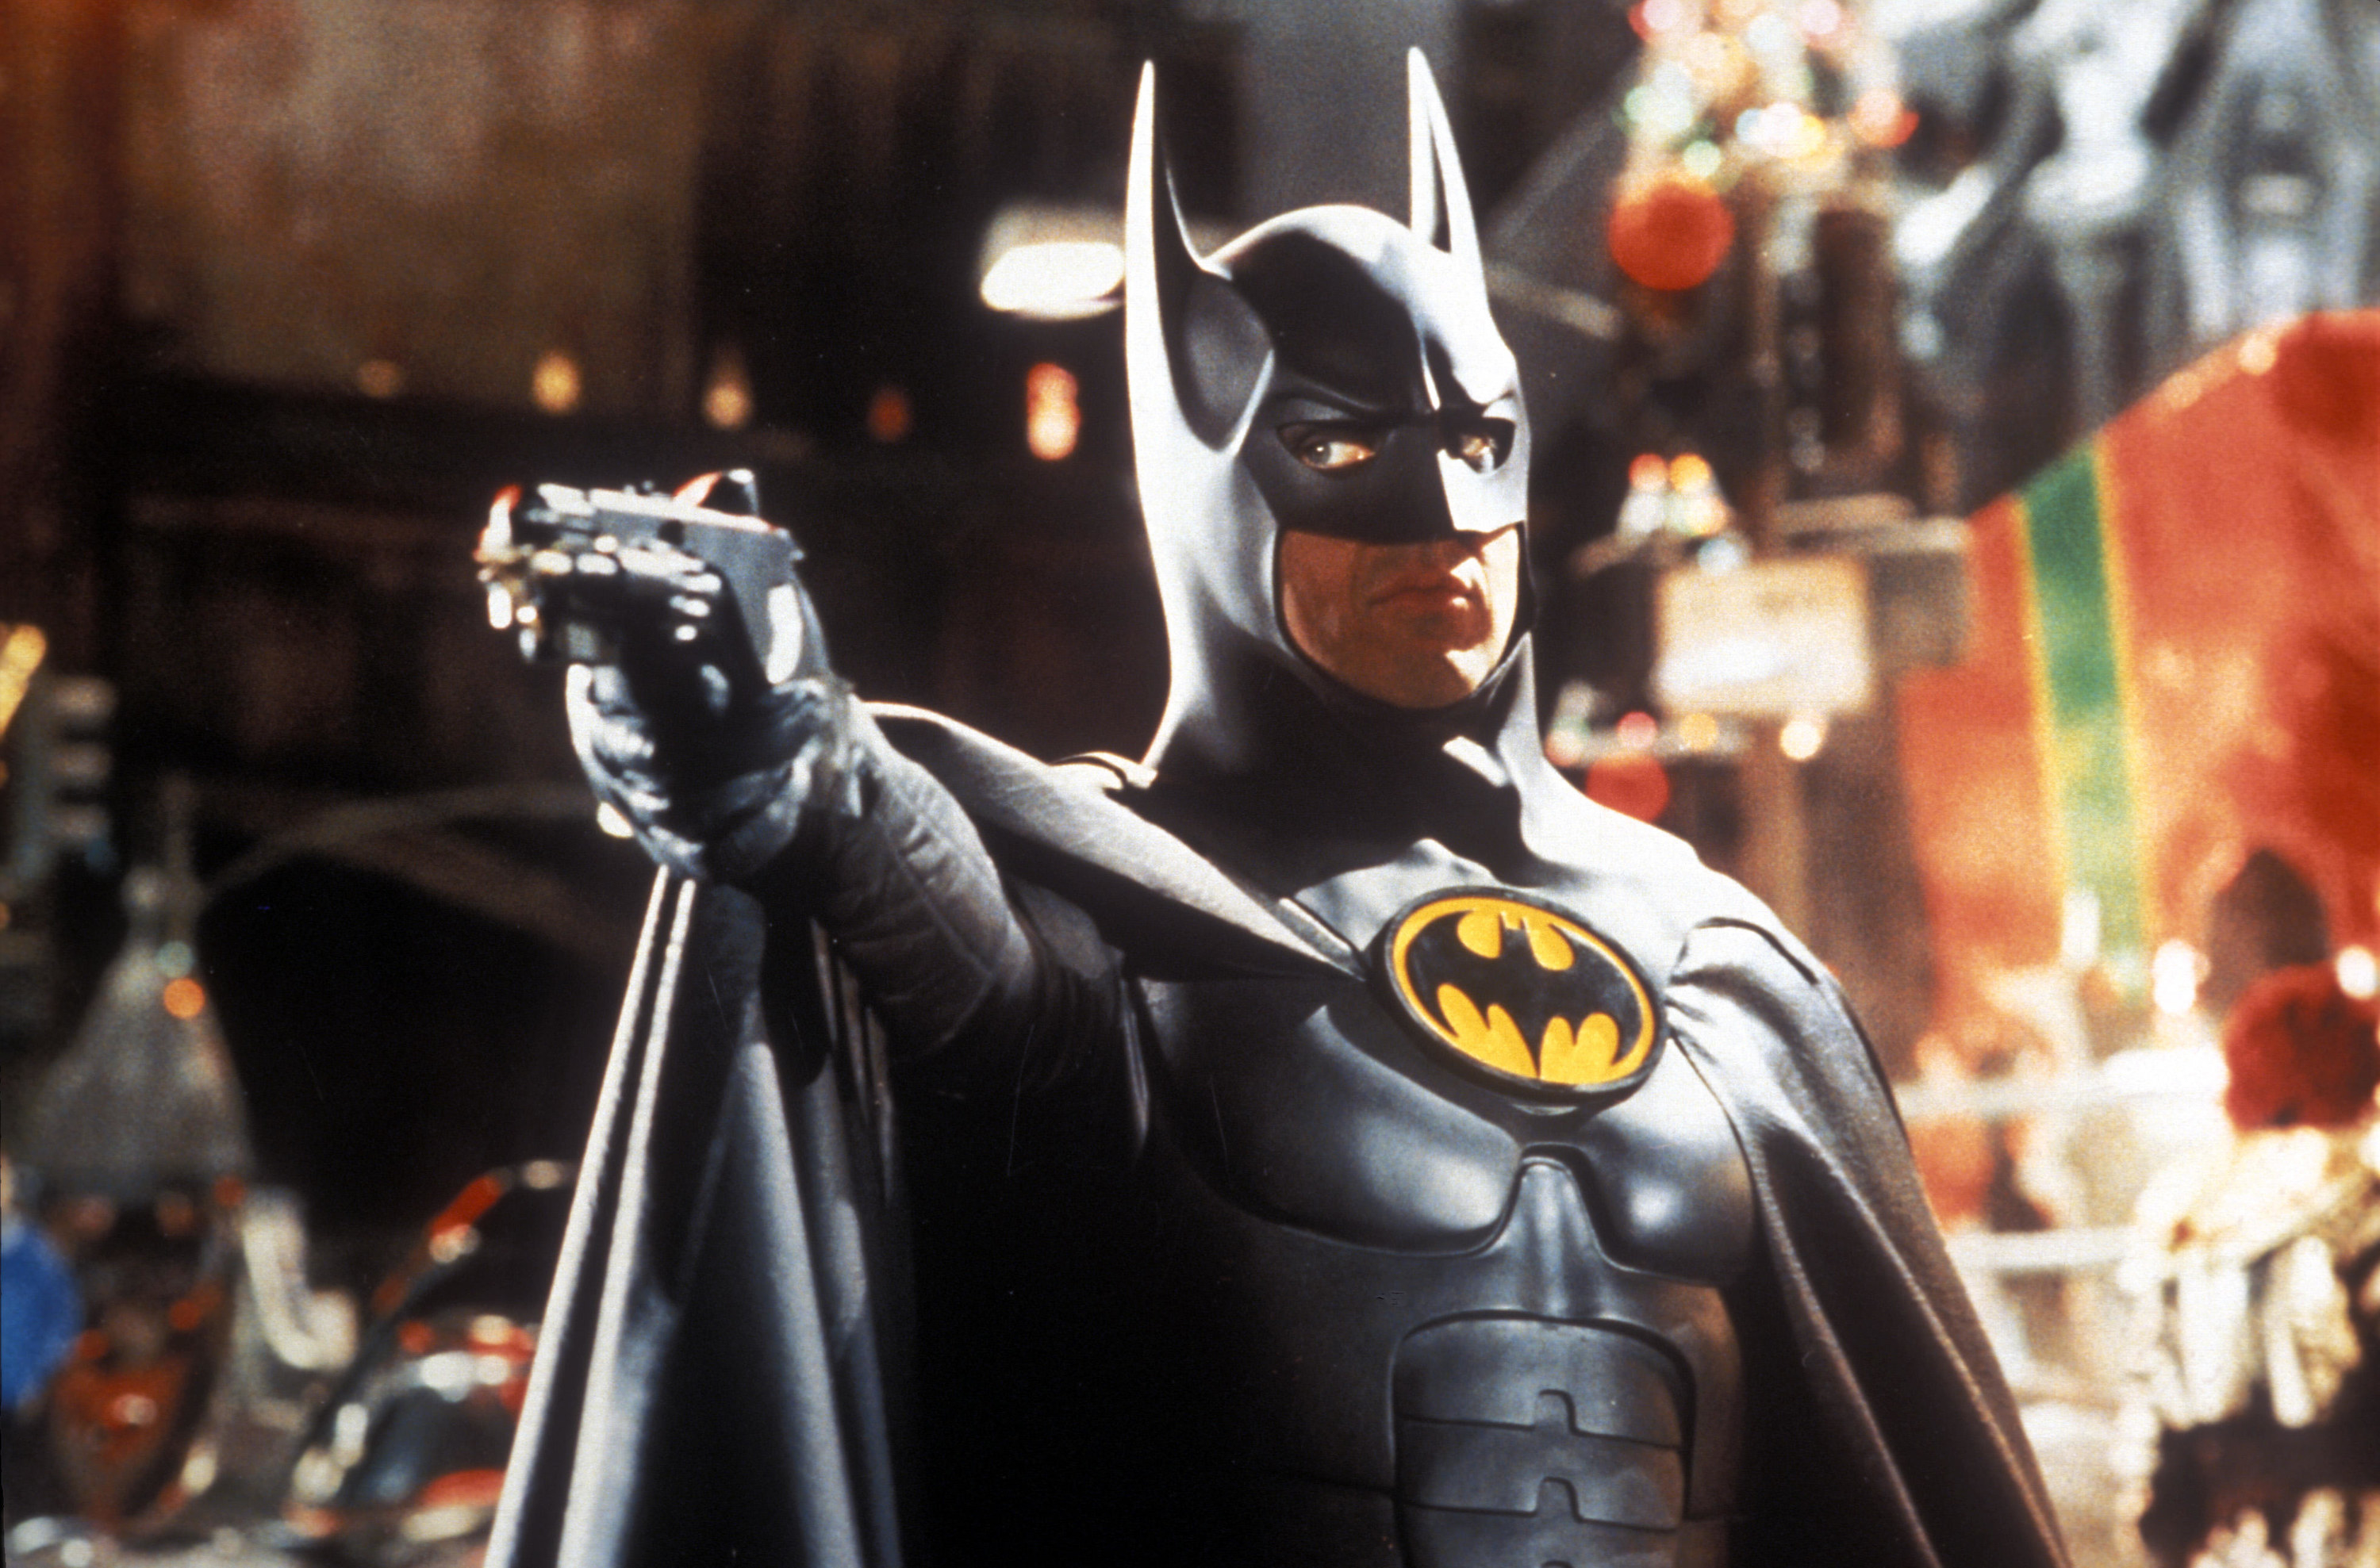 Batman points a gun-like gadget at an enemy at a holiday celebration